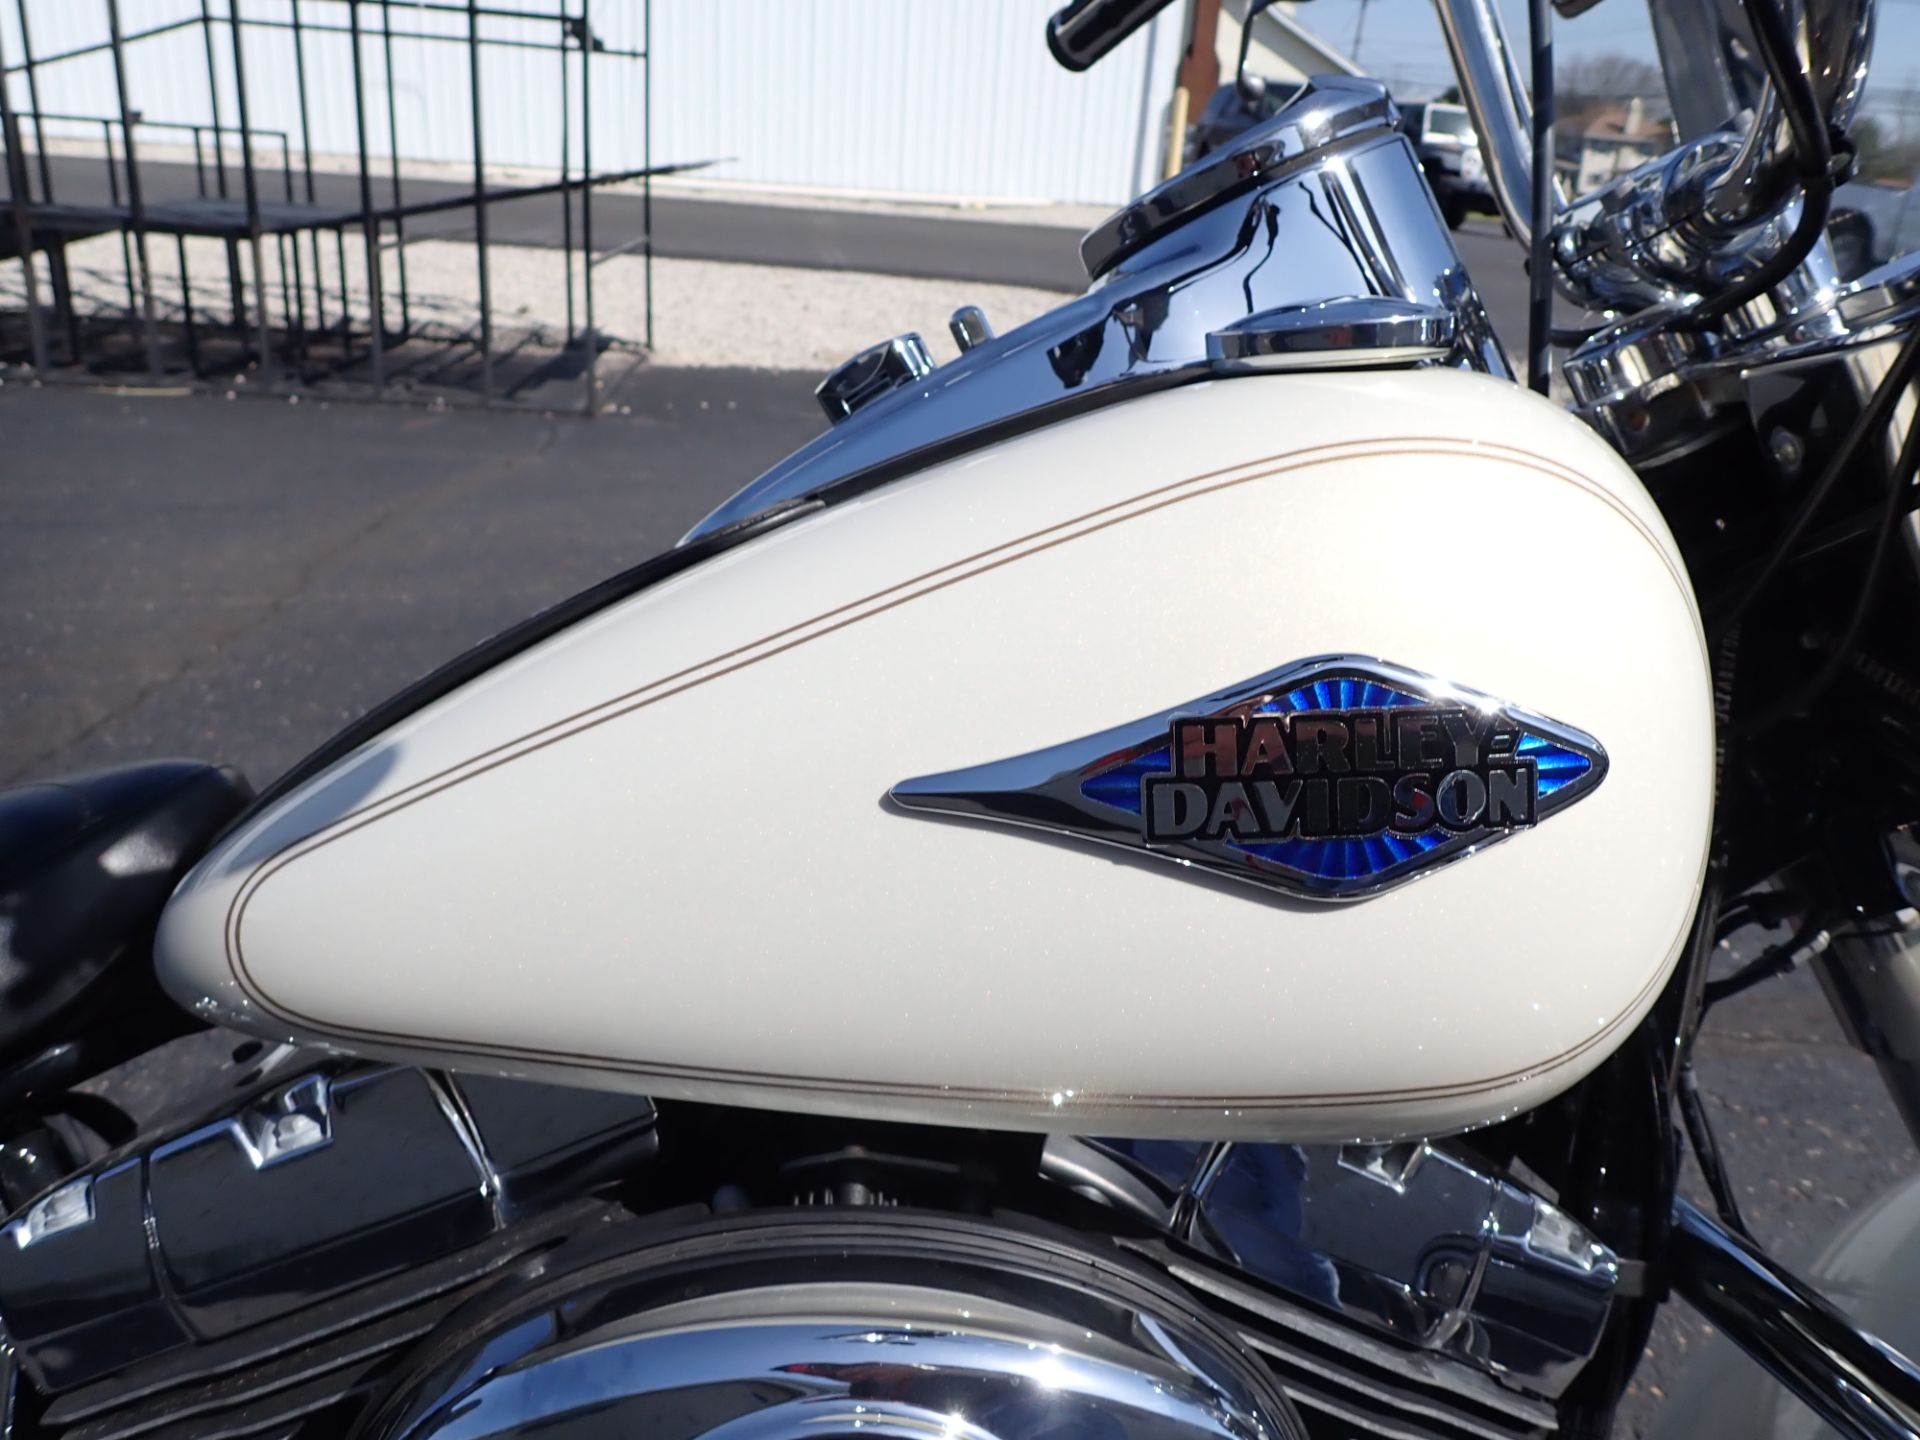 2014 Harley-Davidson Heritage Softail® Classic in Massillon, Ohio - Photo 3